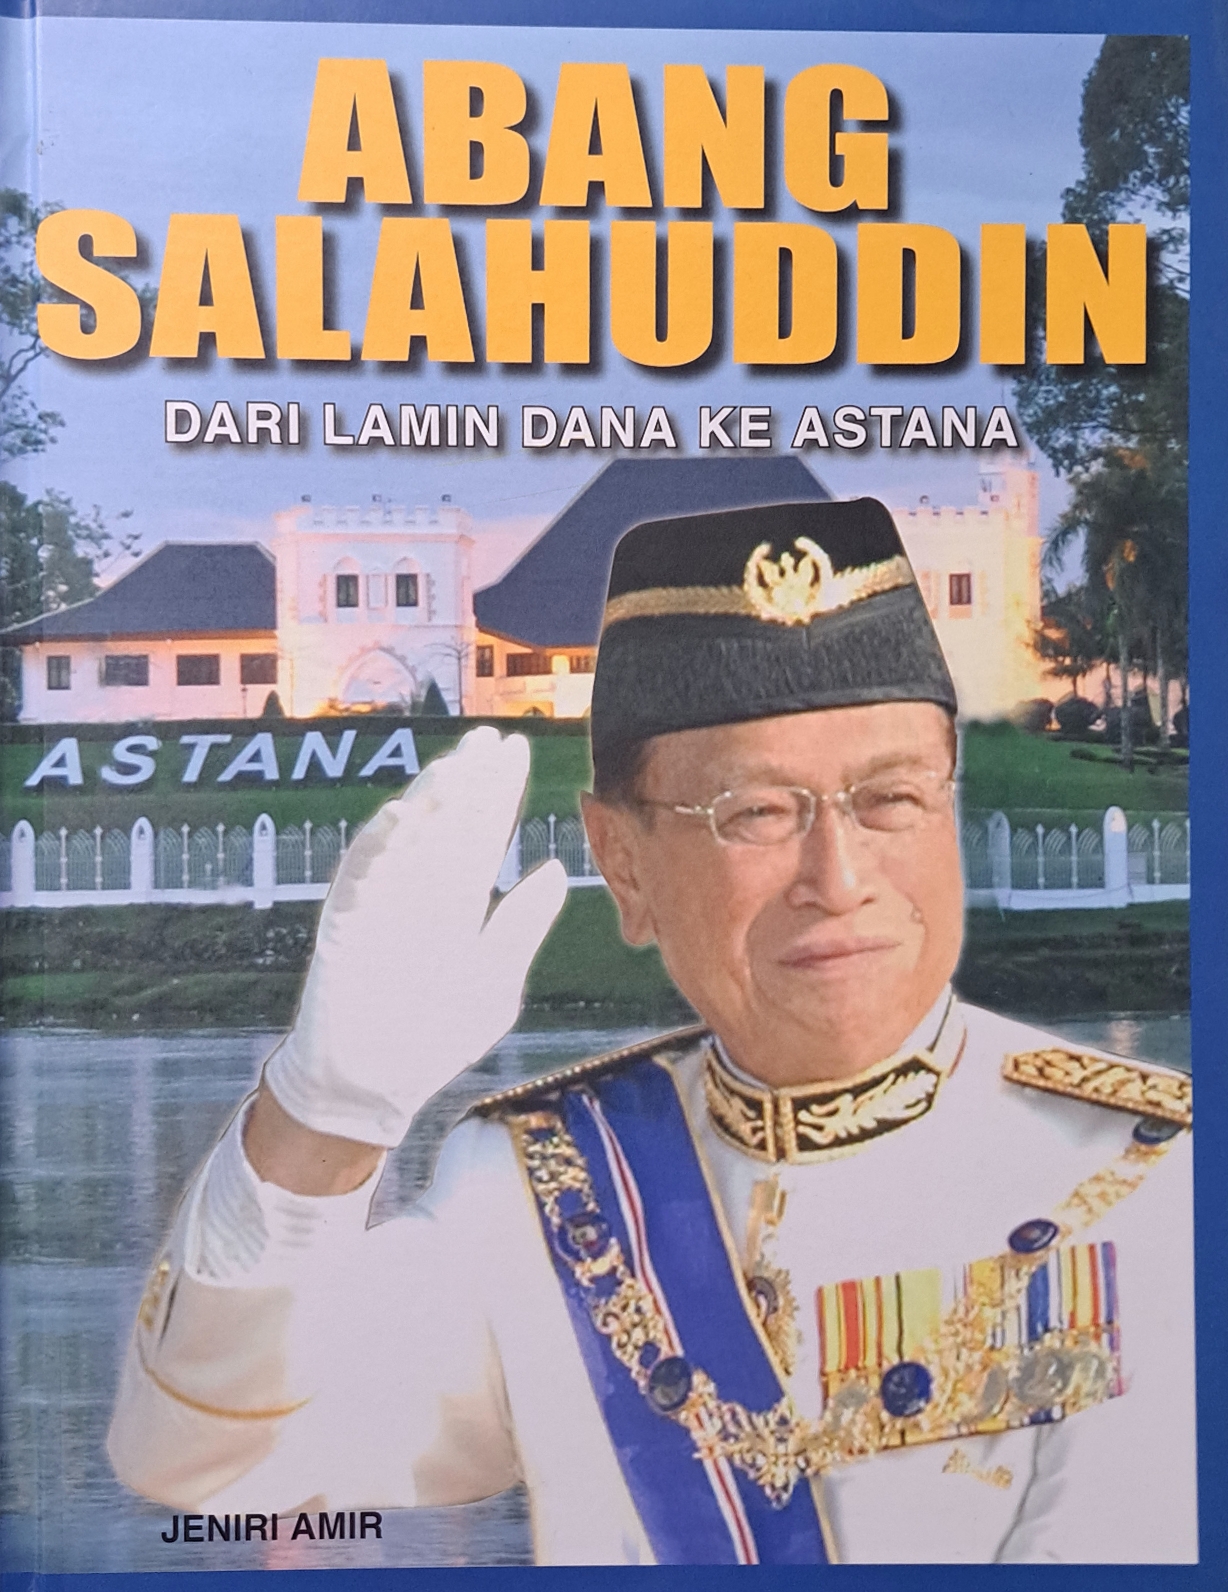 Cover image for Abang Salahuddin dari lamin dana ke astana bibliographic